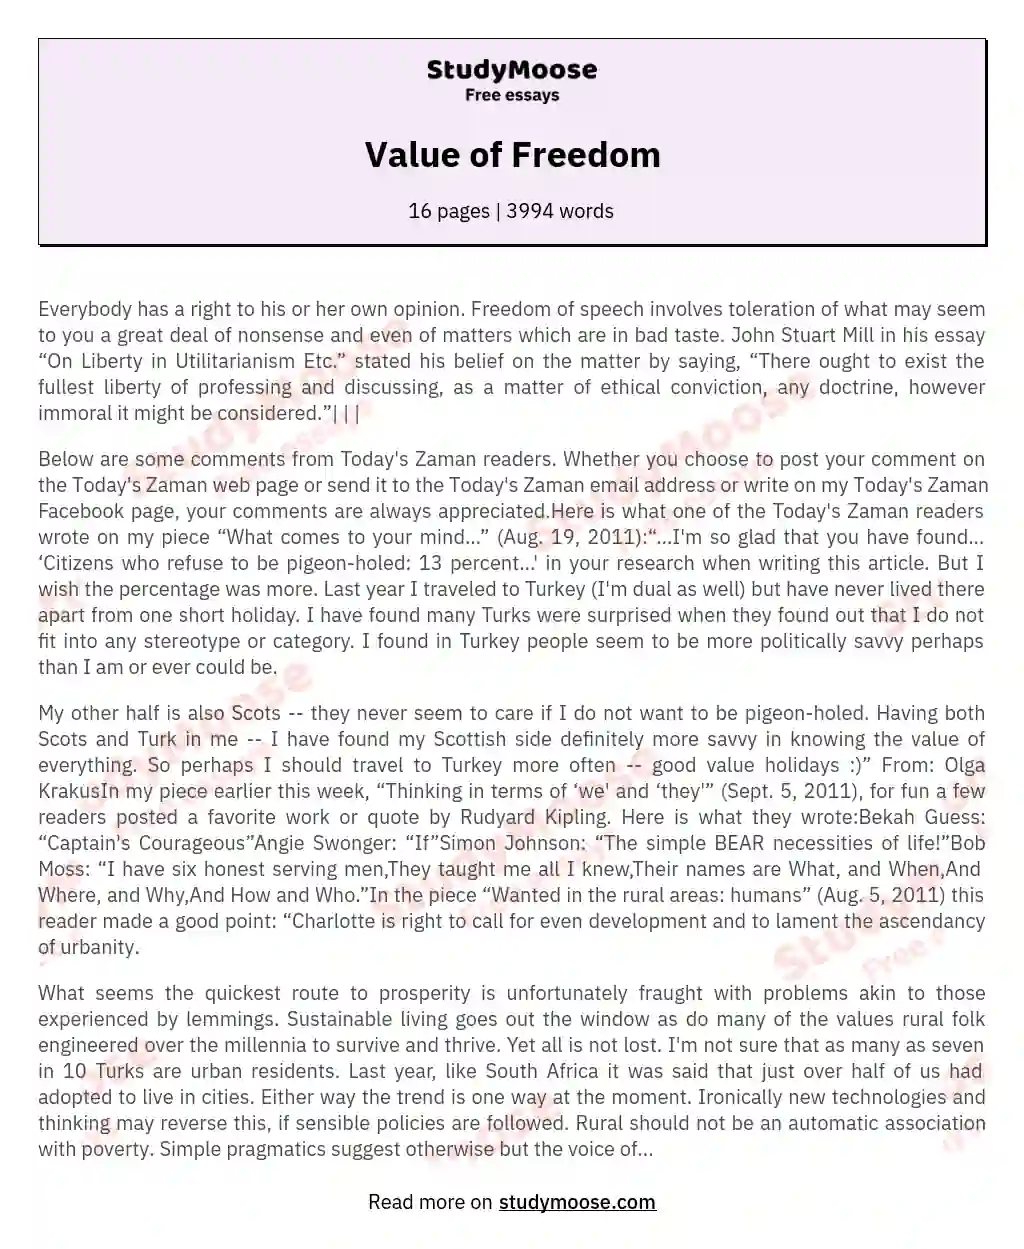 Value of Freedom essay